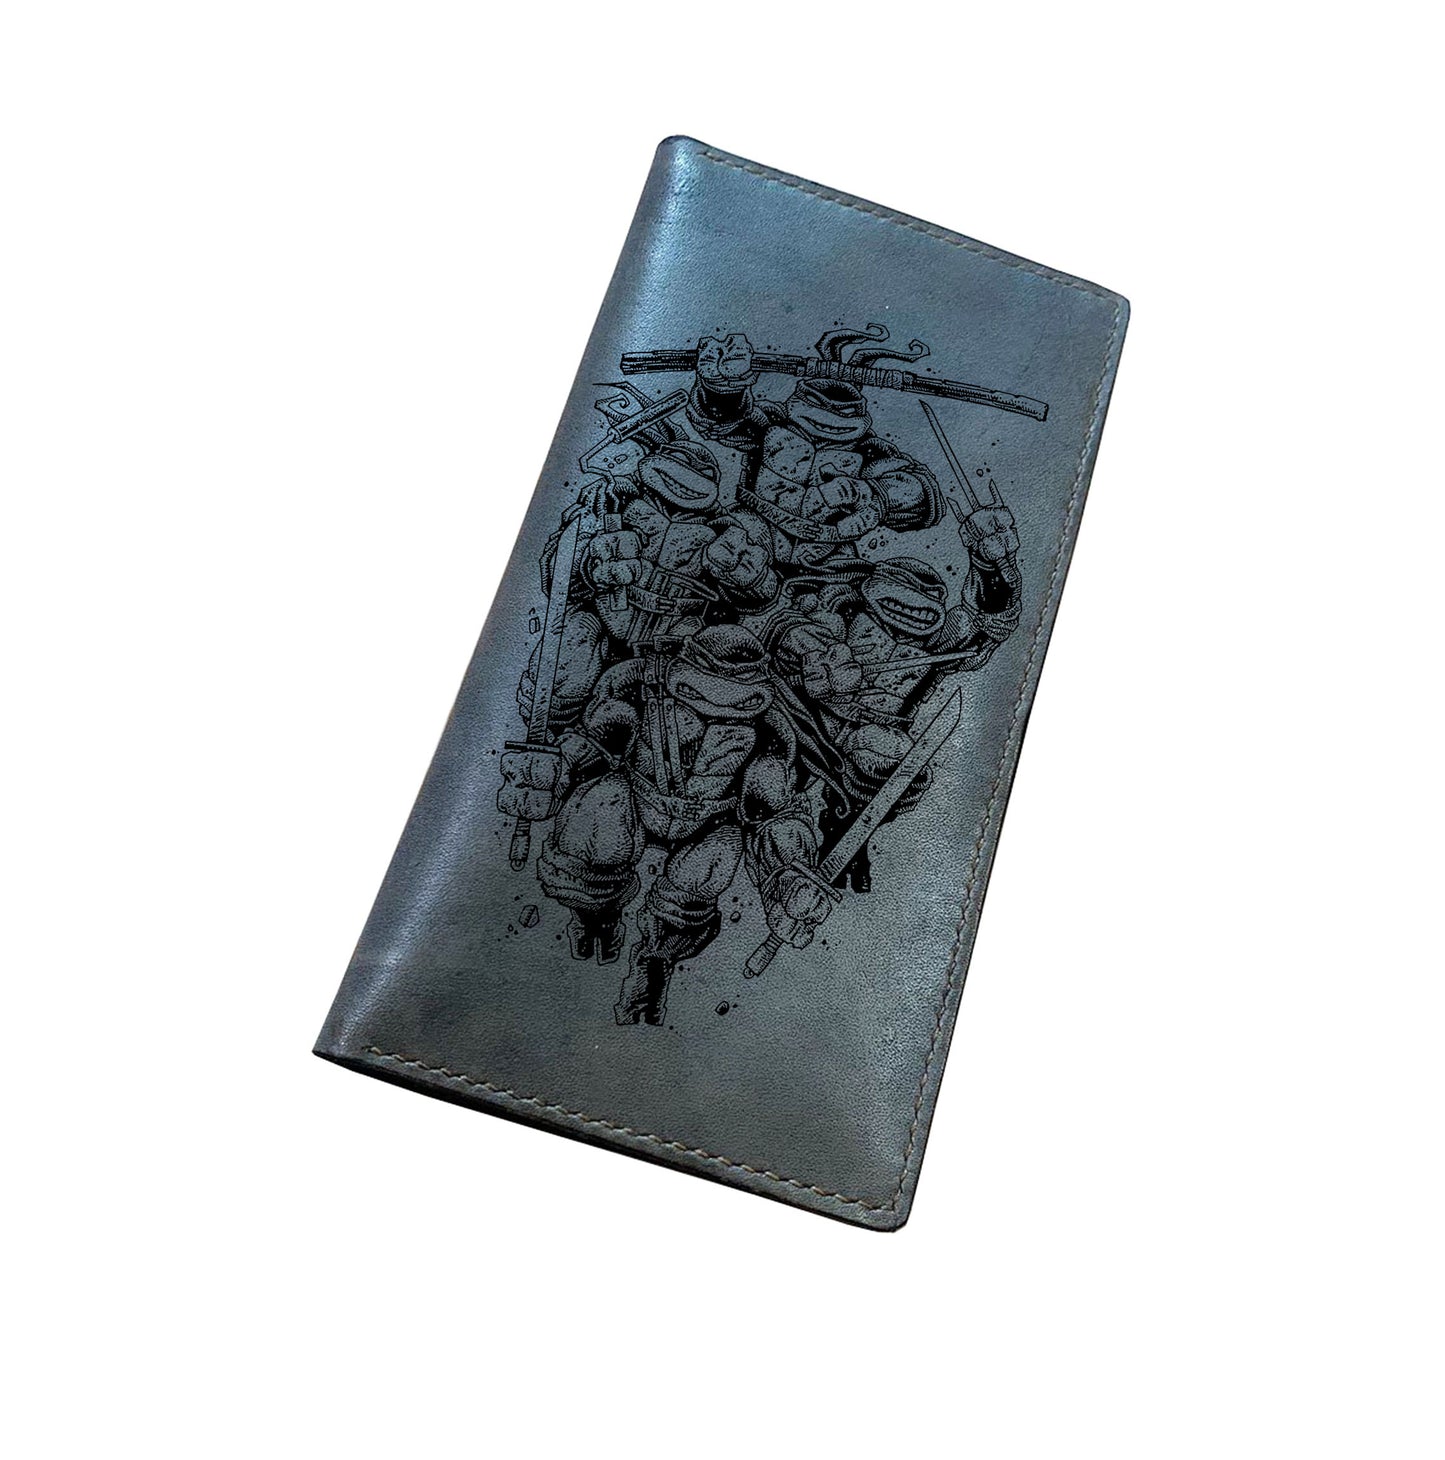 Mayan Corner - Personalized genuine leather handmade wallet, leather gift ideas for him, ninja turtle leather art wallet - master splinter - 01112213